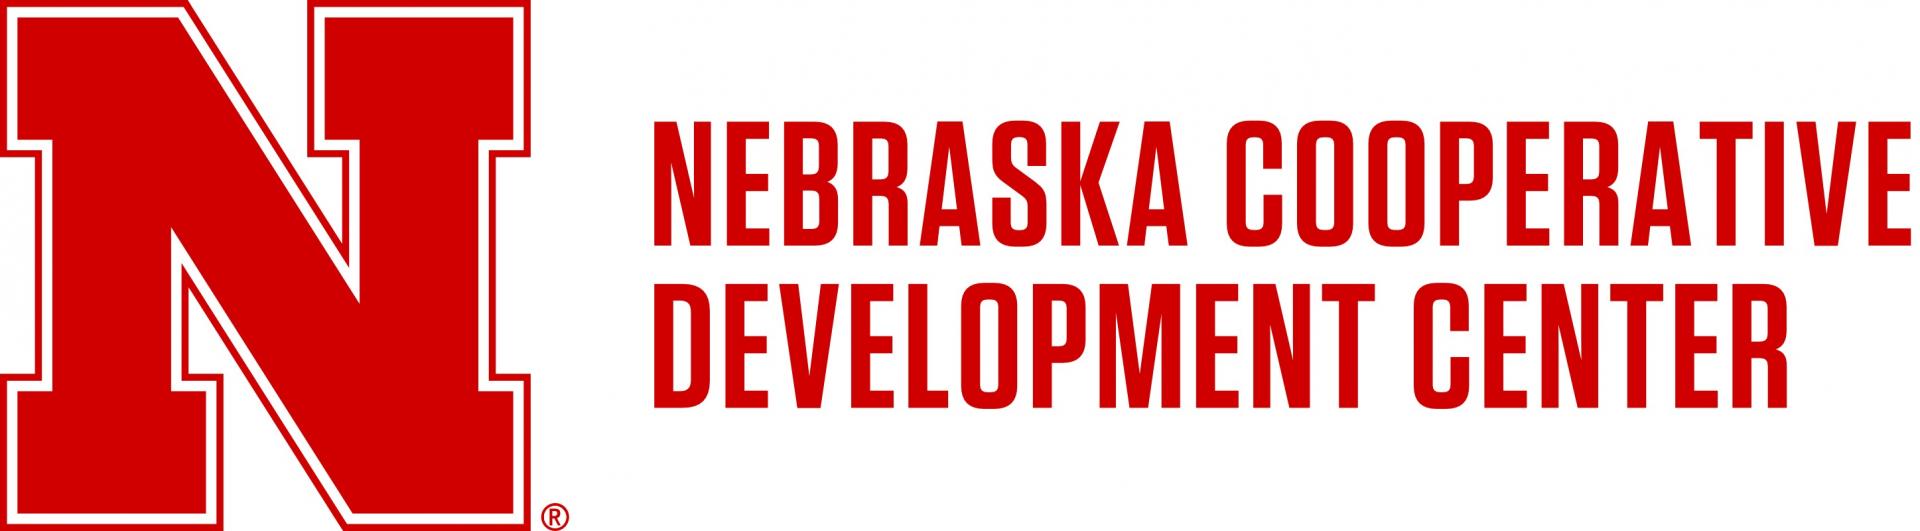 Nebraska Cooperative Development Center logo